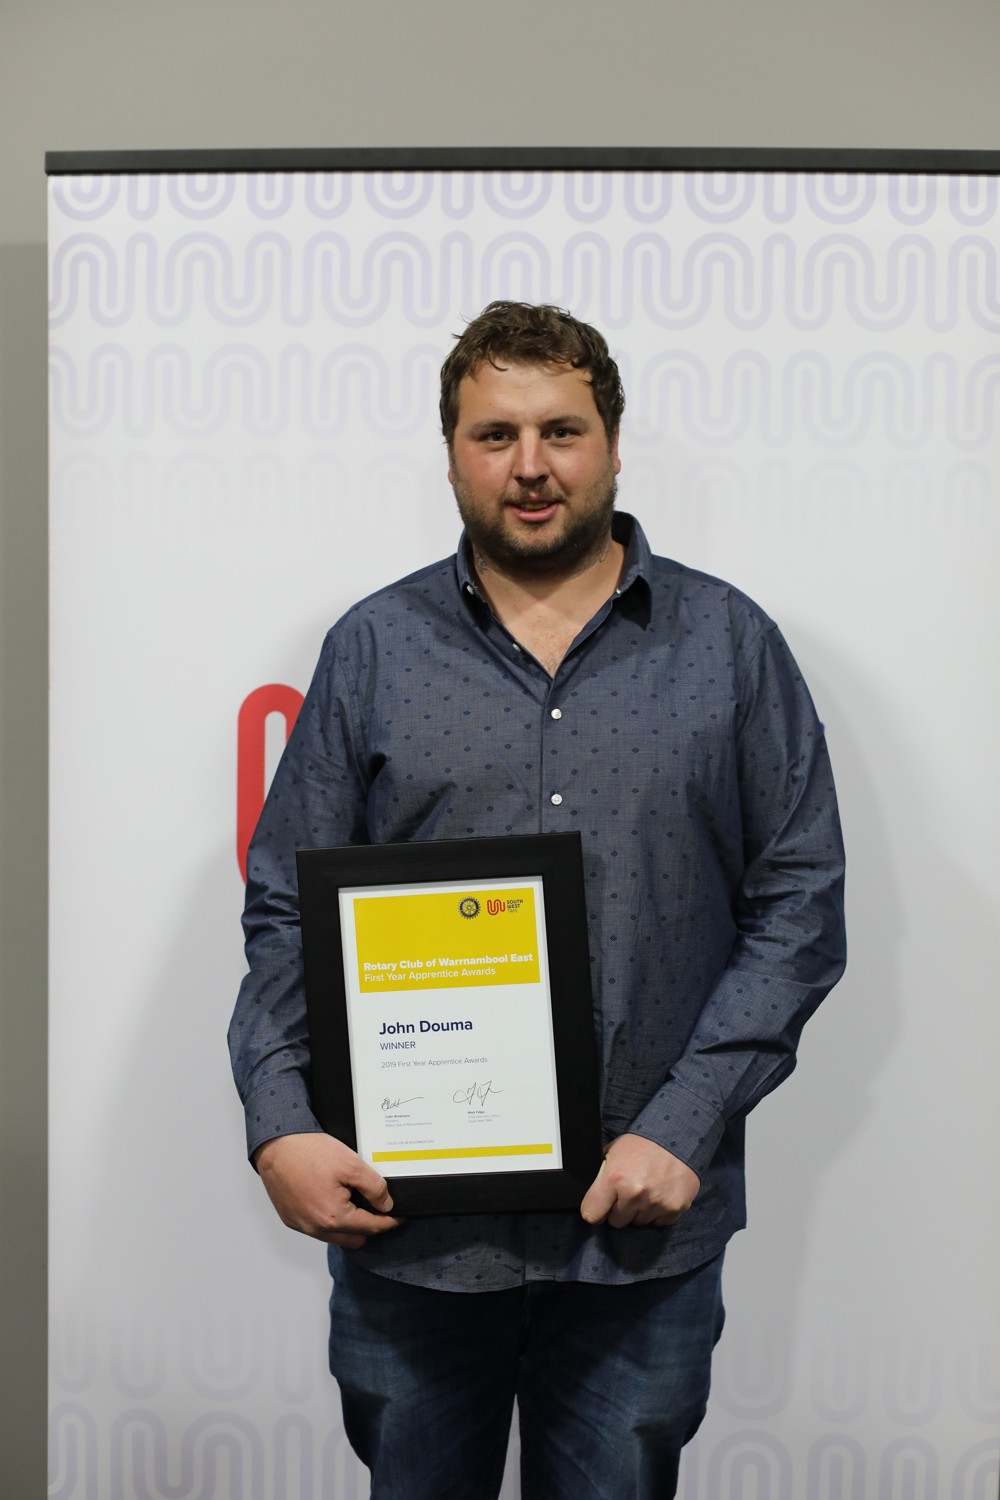 John Douma is the winner of the 2019 Rotary Club of Warrnambool East First Year Apprentice Award.